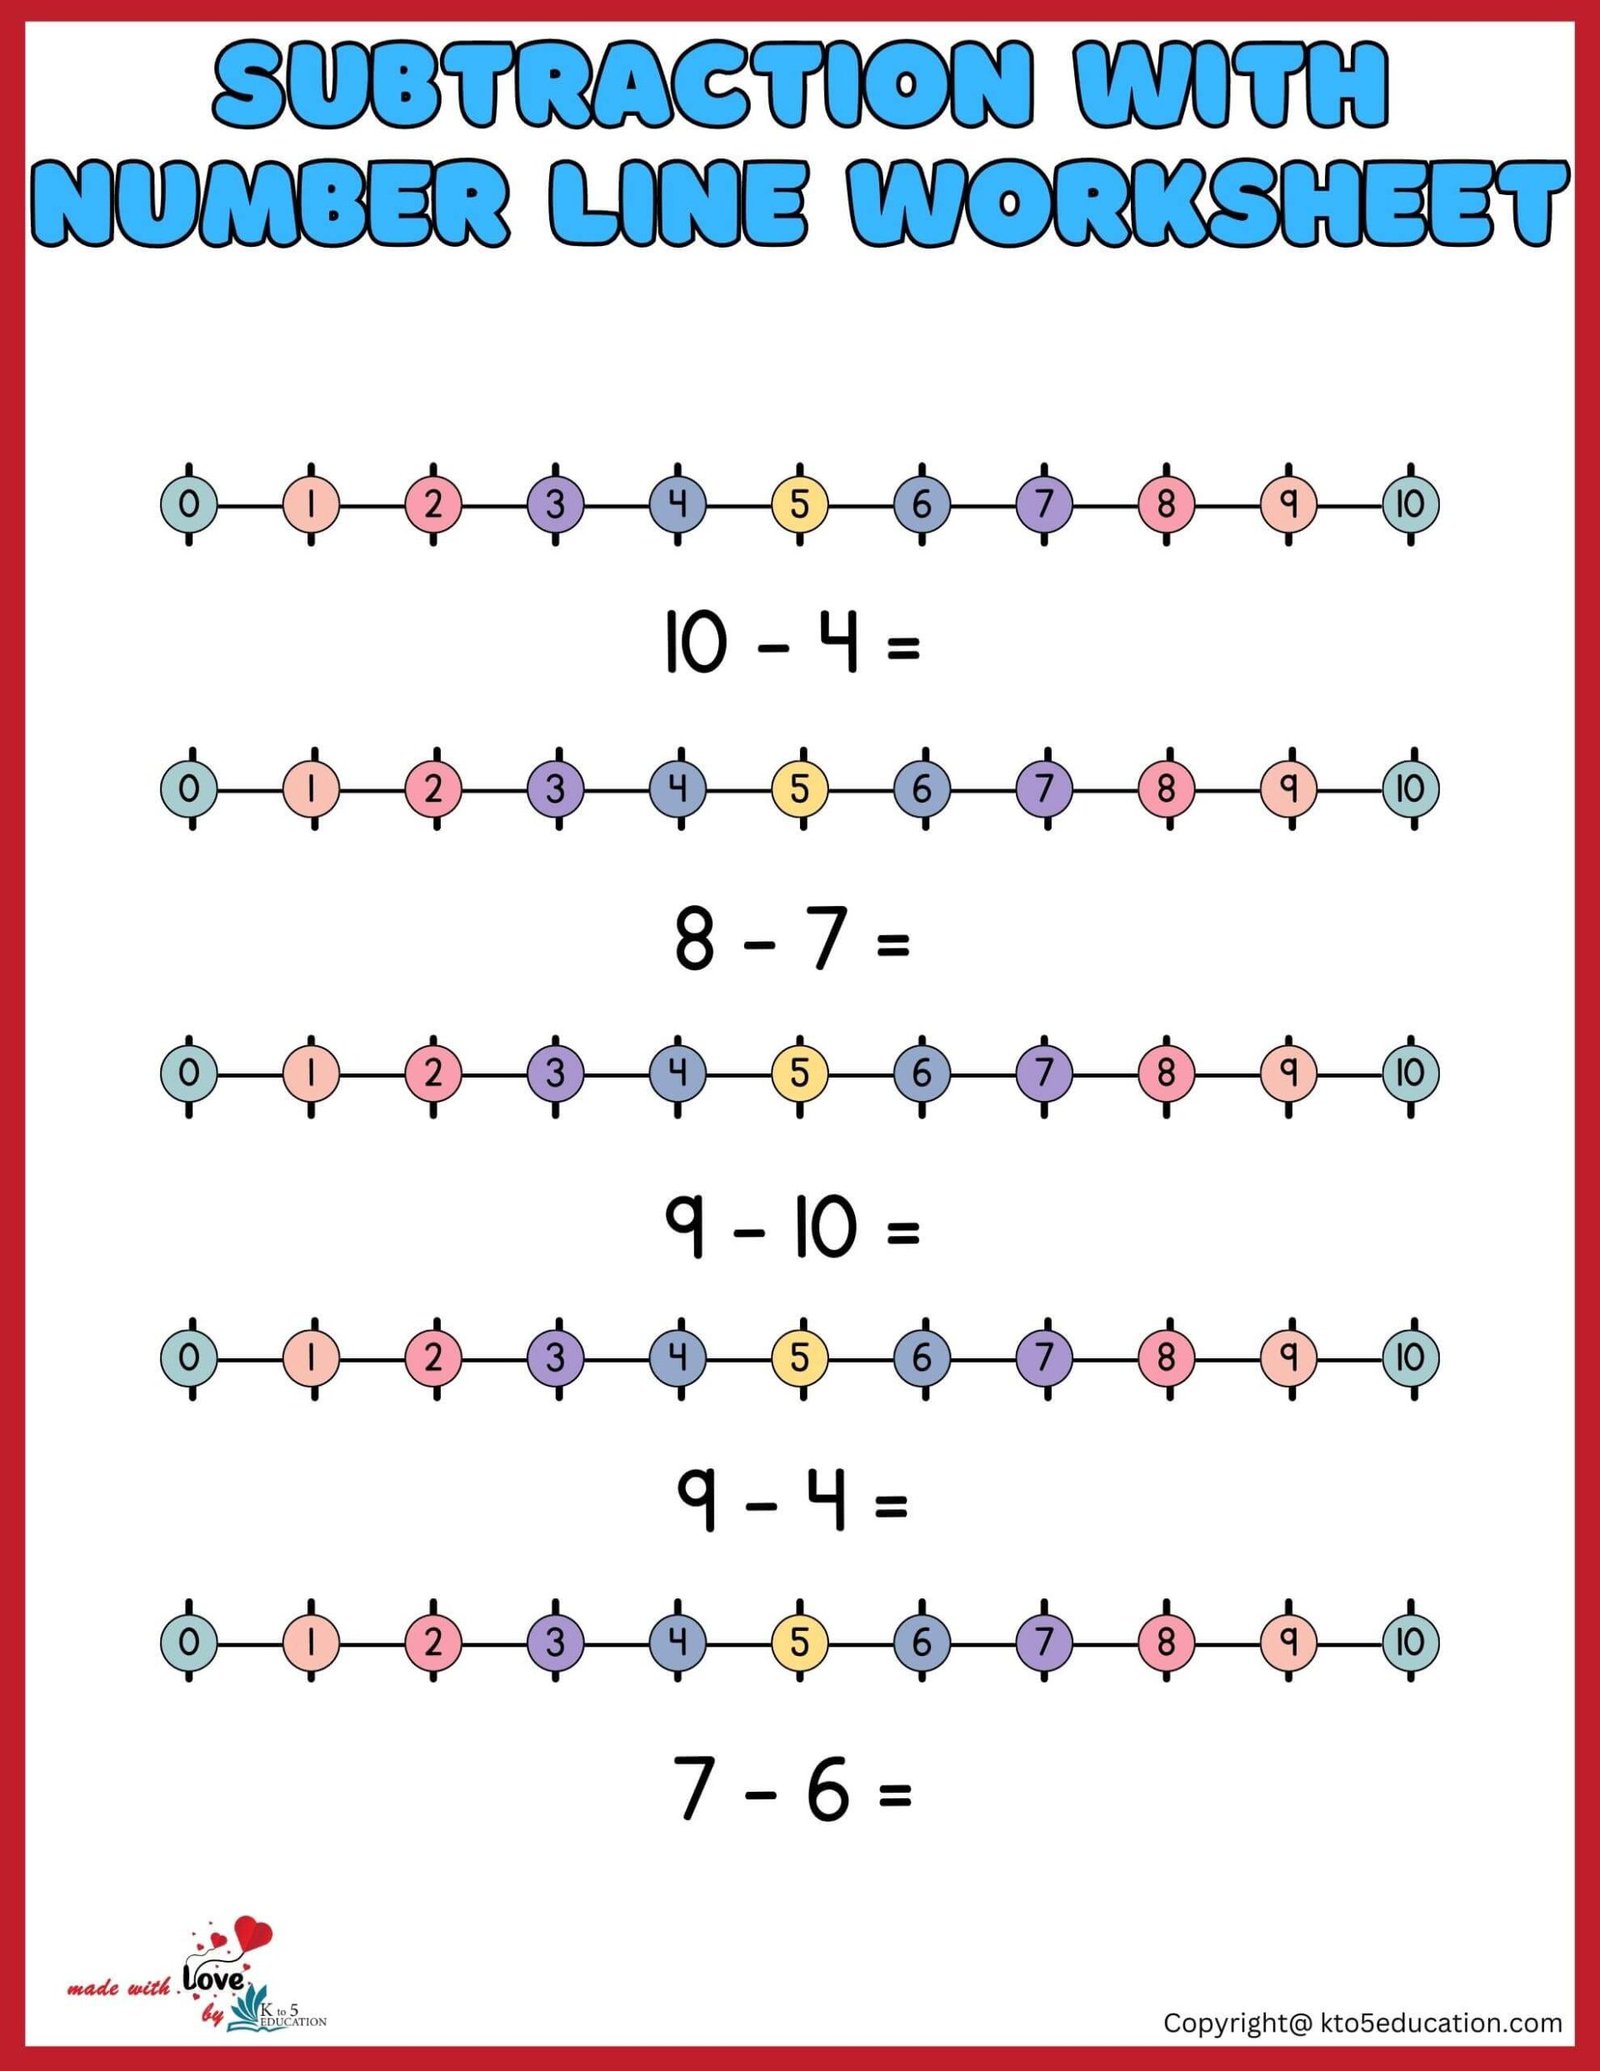 Subtraction With Number Line Worksheet 1 10 For Kids